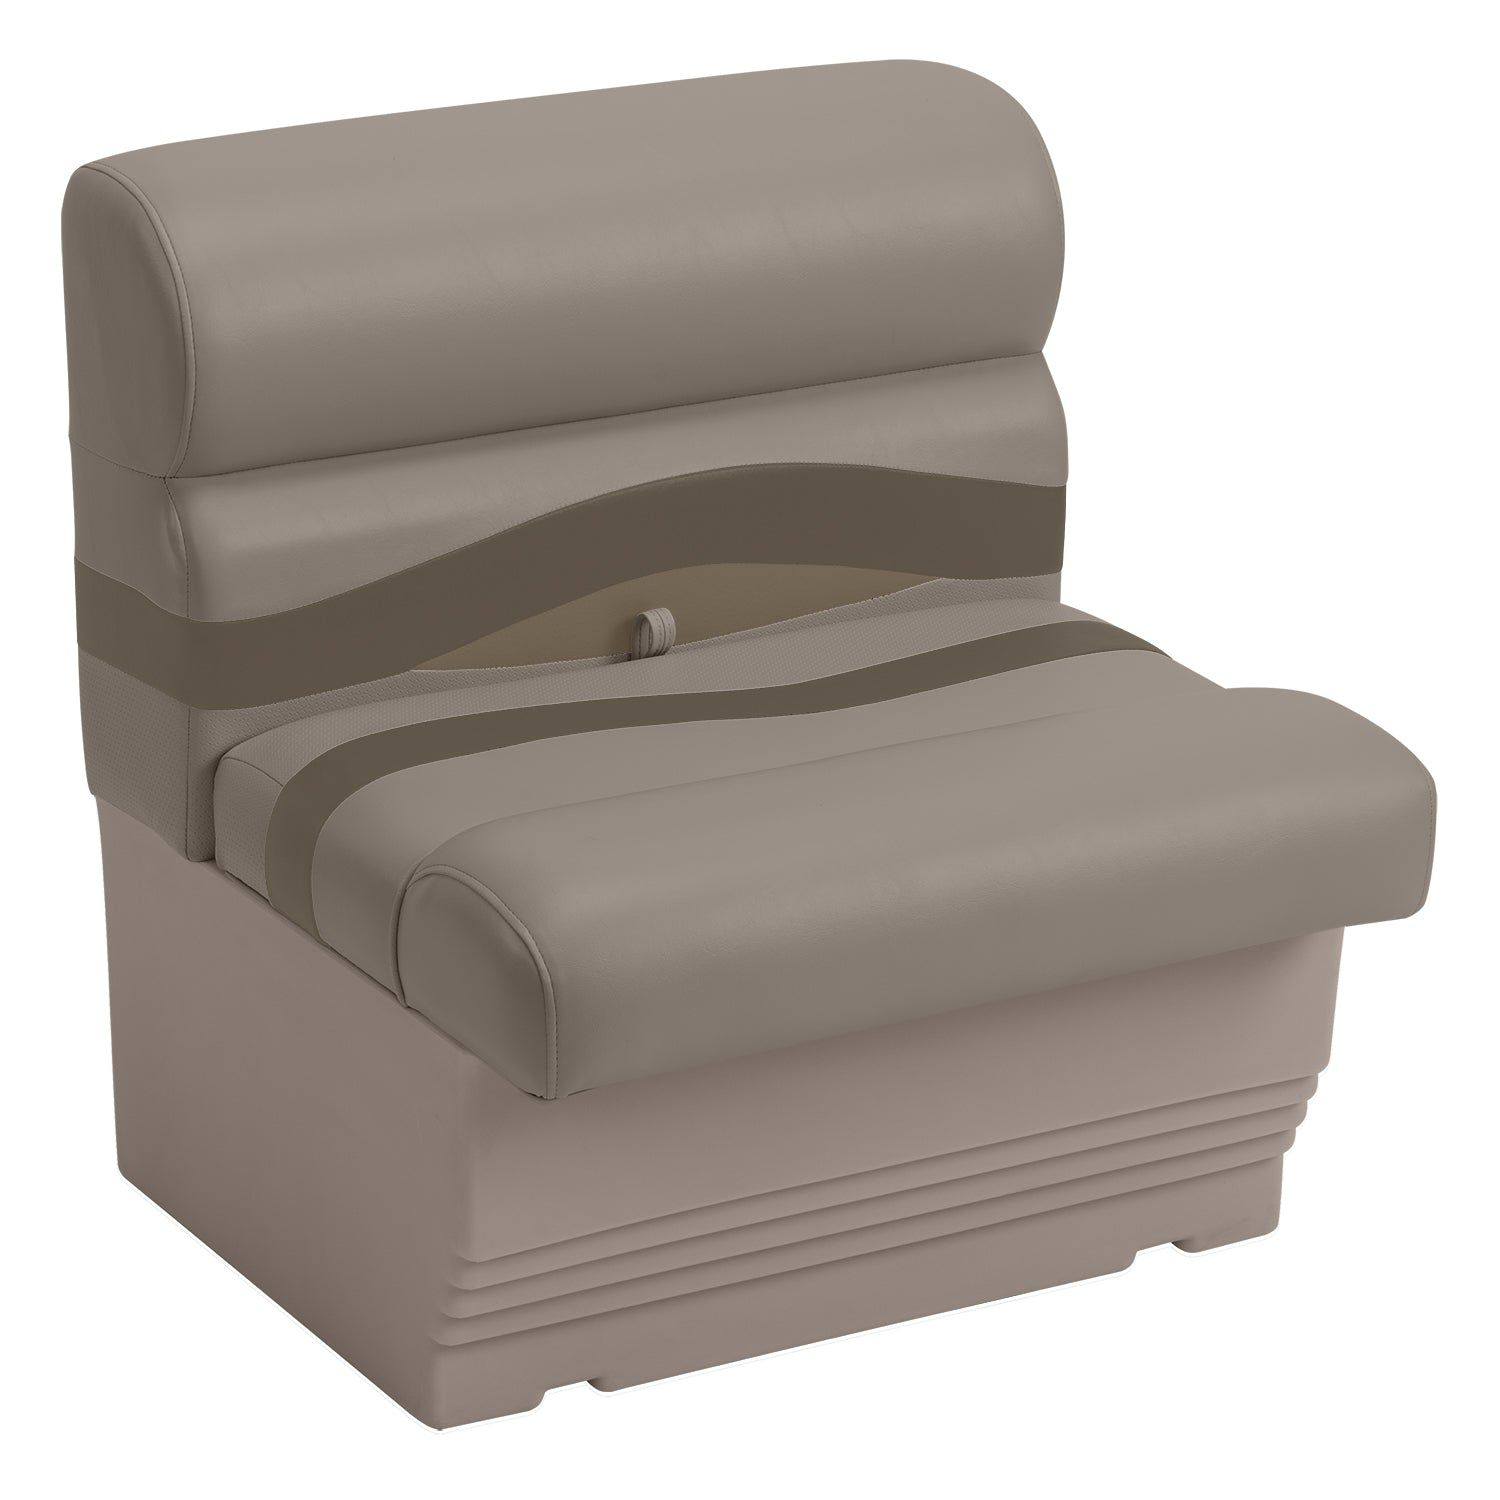 Wise Premier Series Pontoon Furniture 27'' Bench Seat with Base - Mocha Java/Mushroom/Cafe